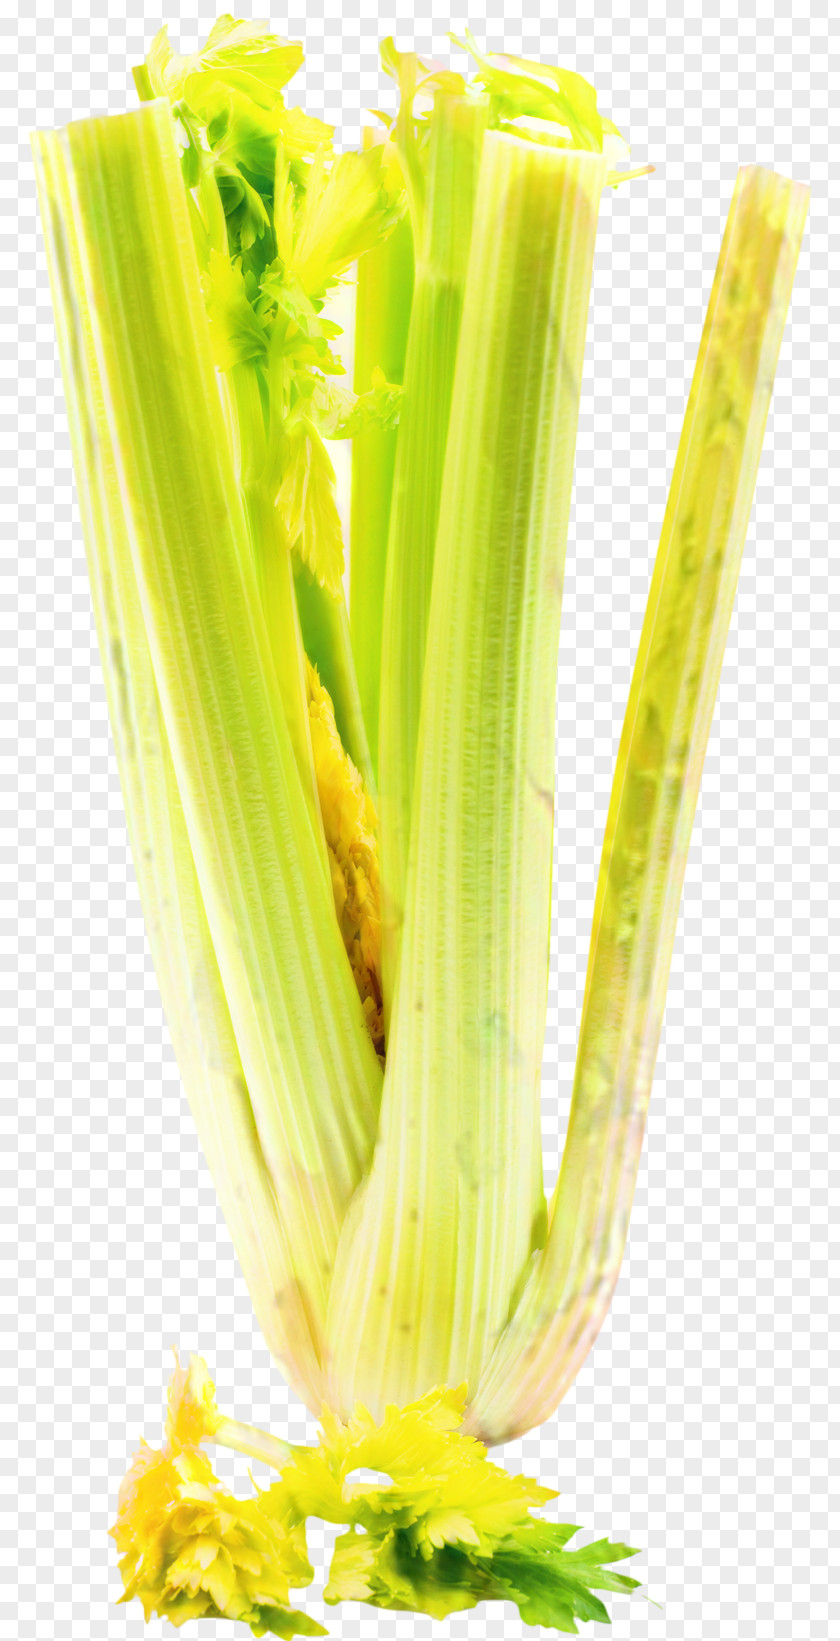 Leaf Vegetable Corn Cartoon PNG